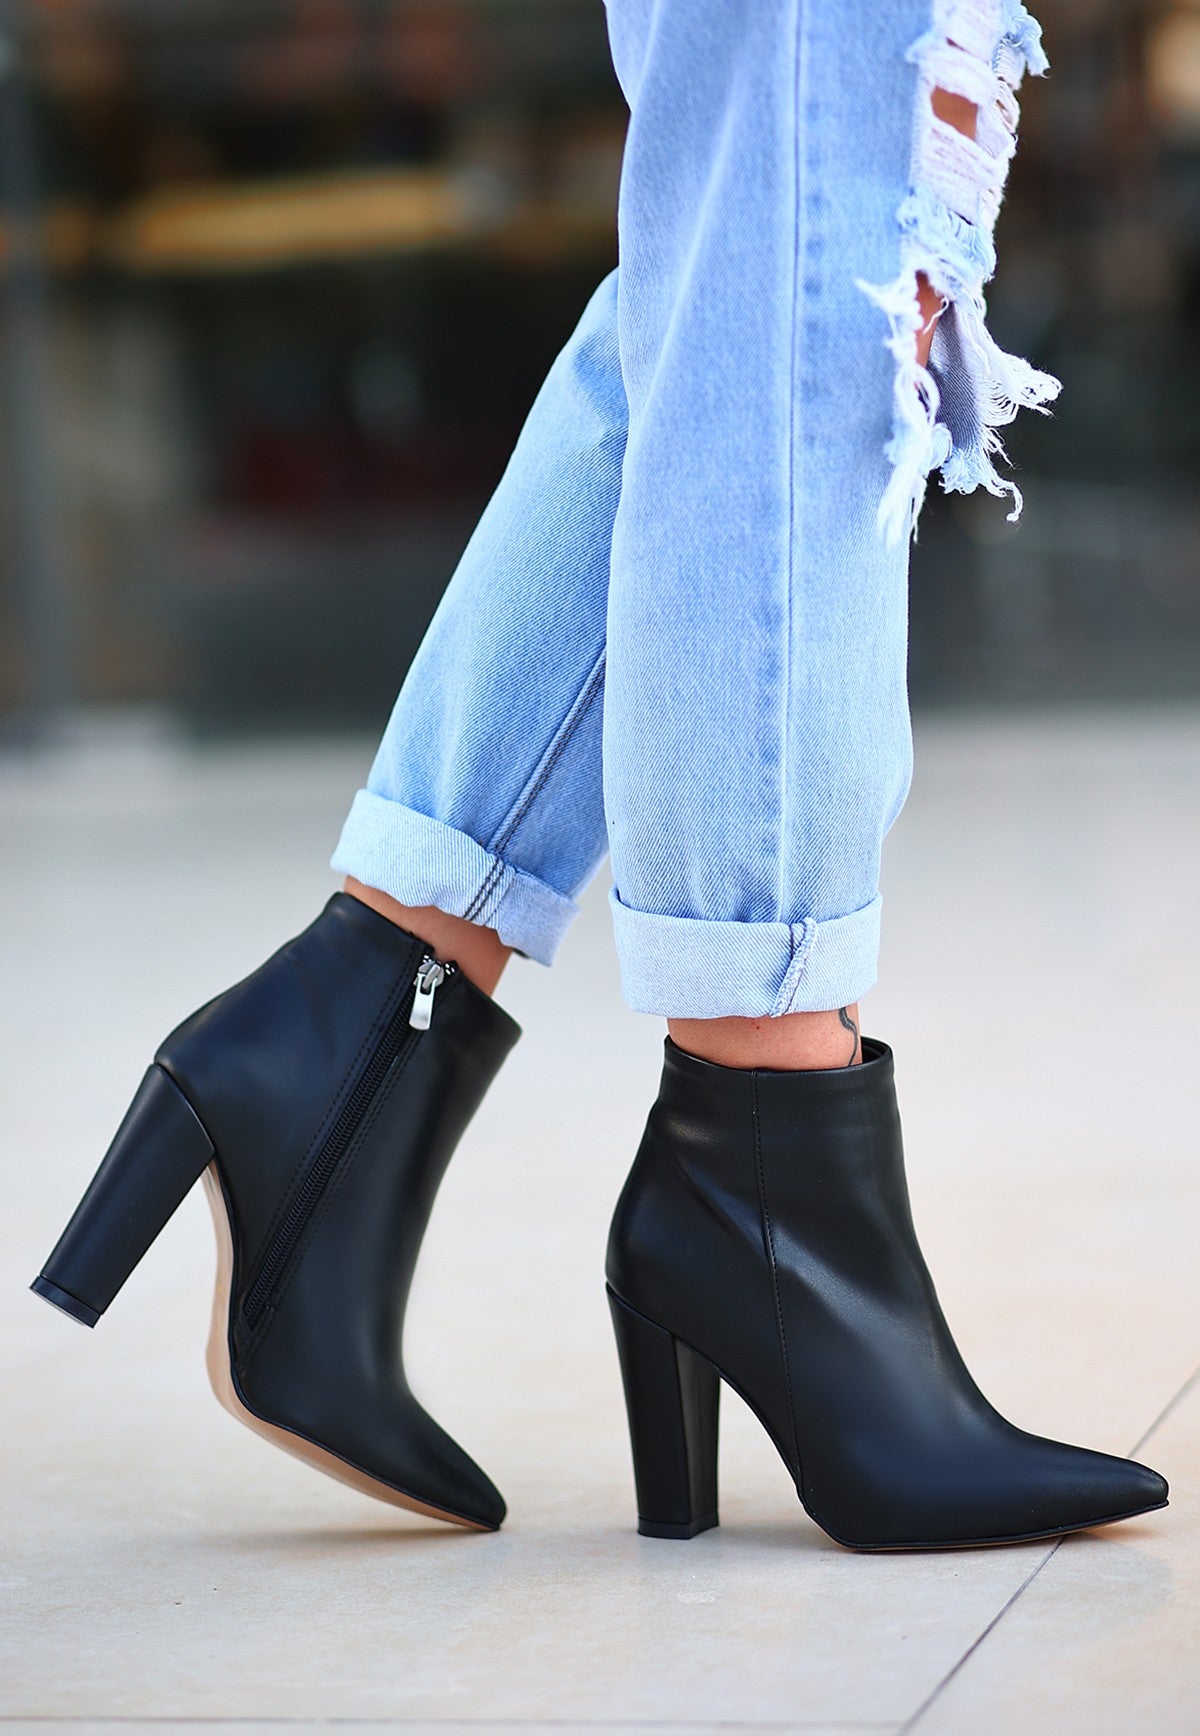 Women's Black Skin Heeled Boots - STREETMODE ™